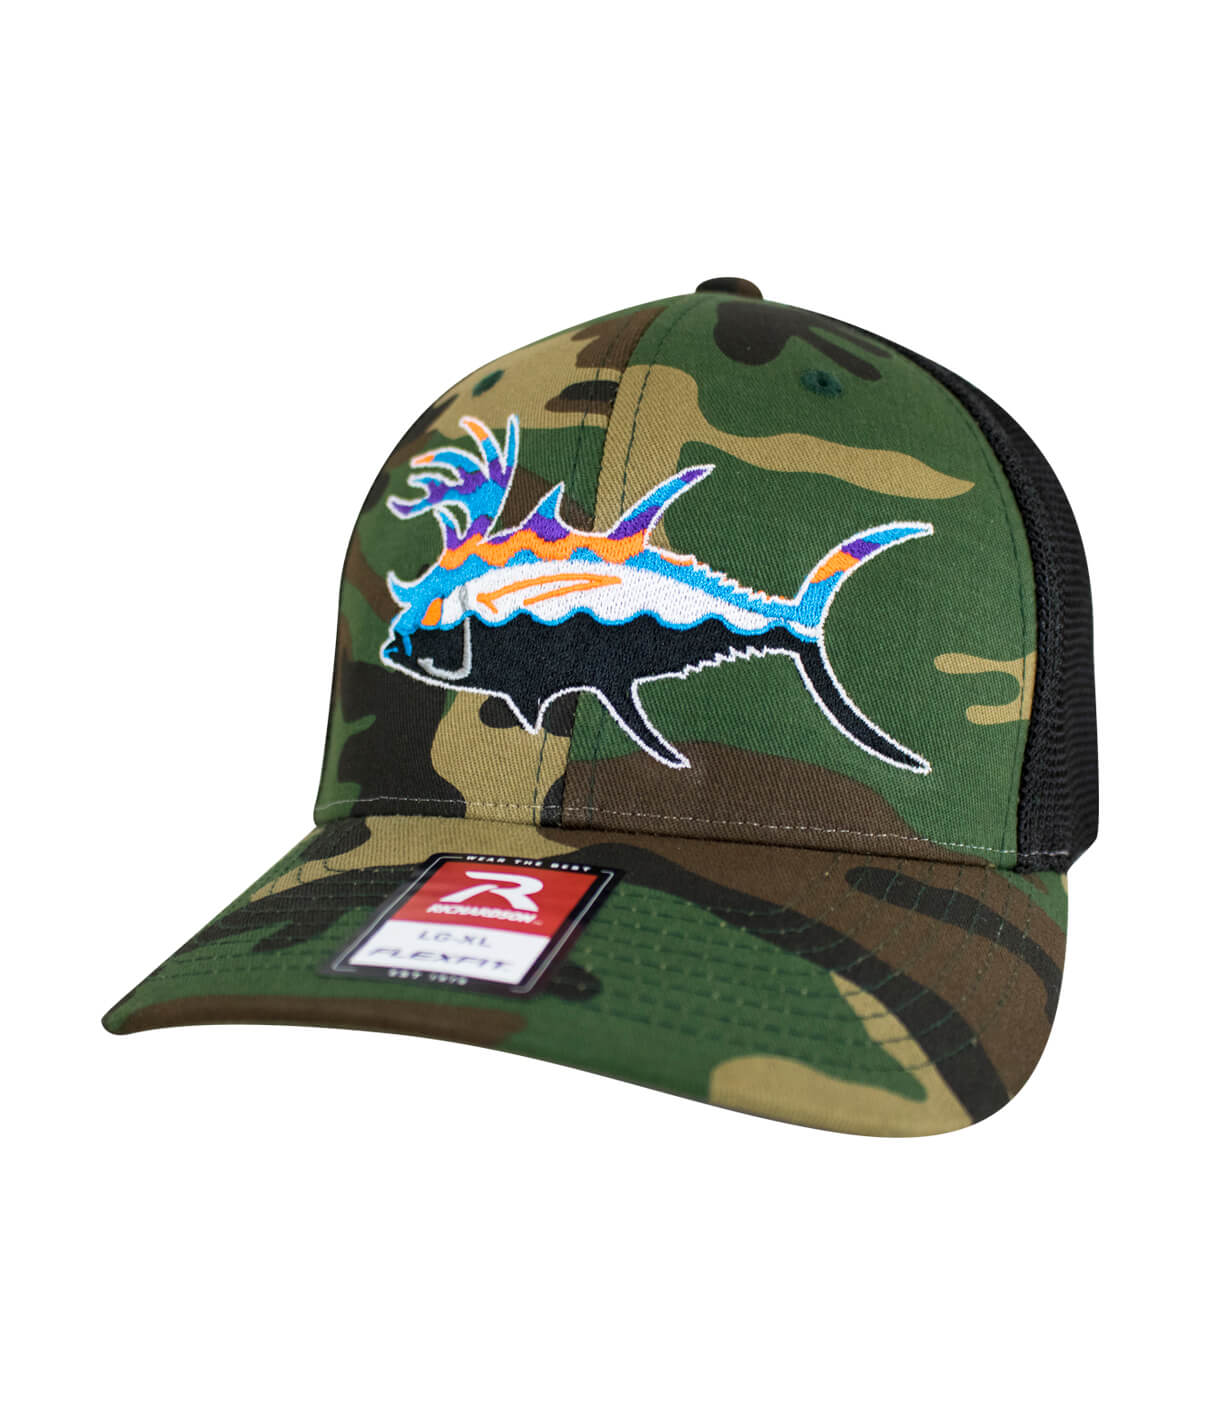 Hatlander Las Vegas Leaf Camouflage Baseball Caps Summer Fishing